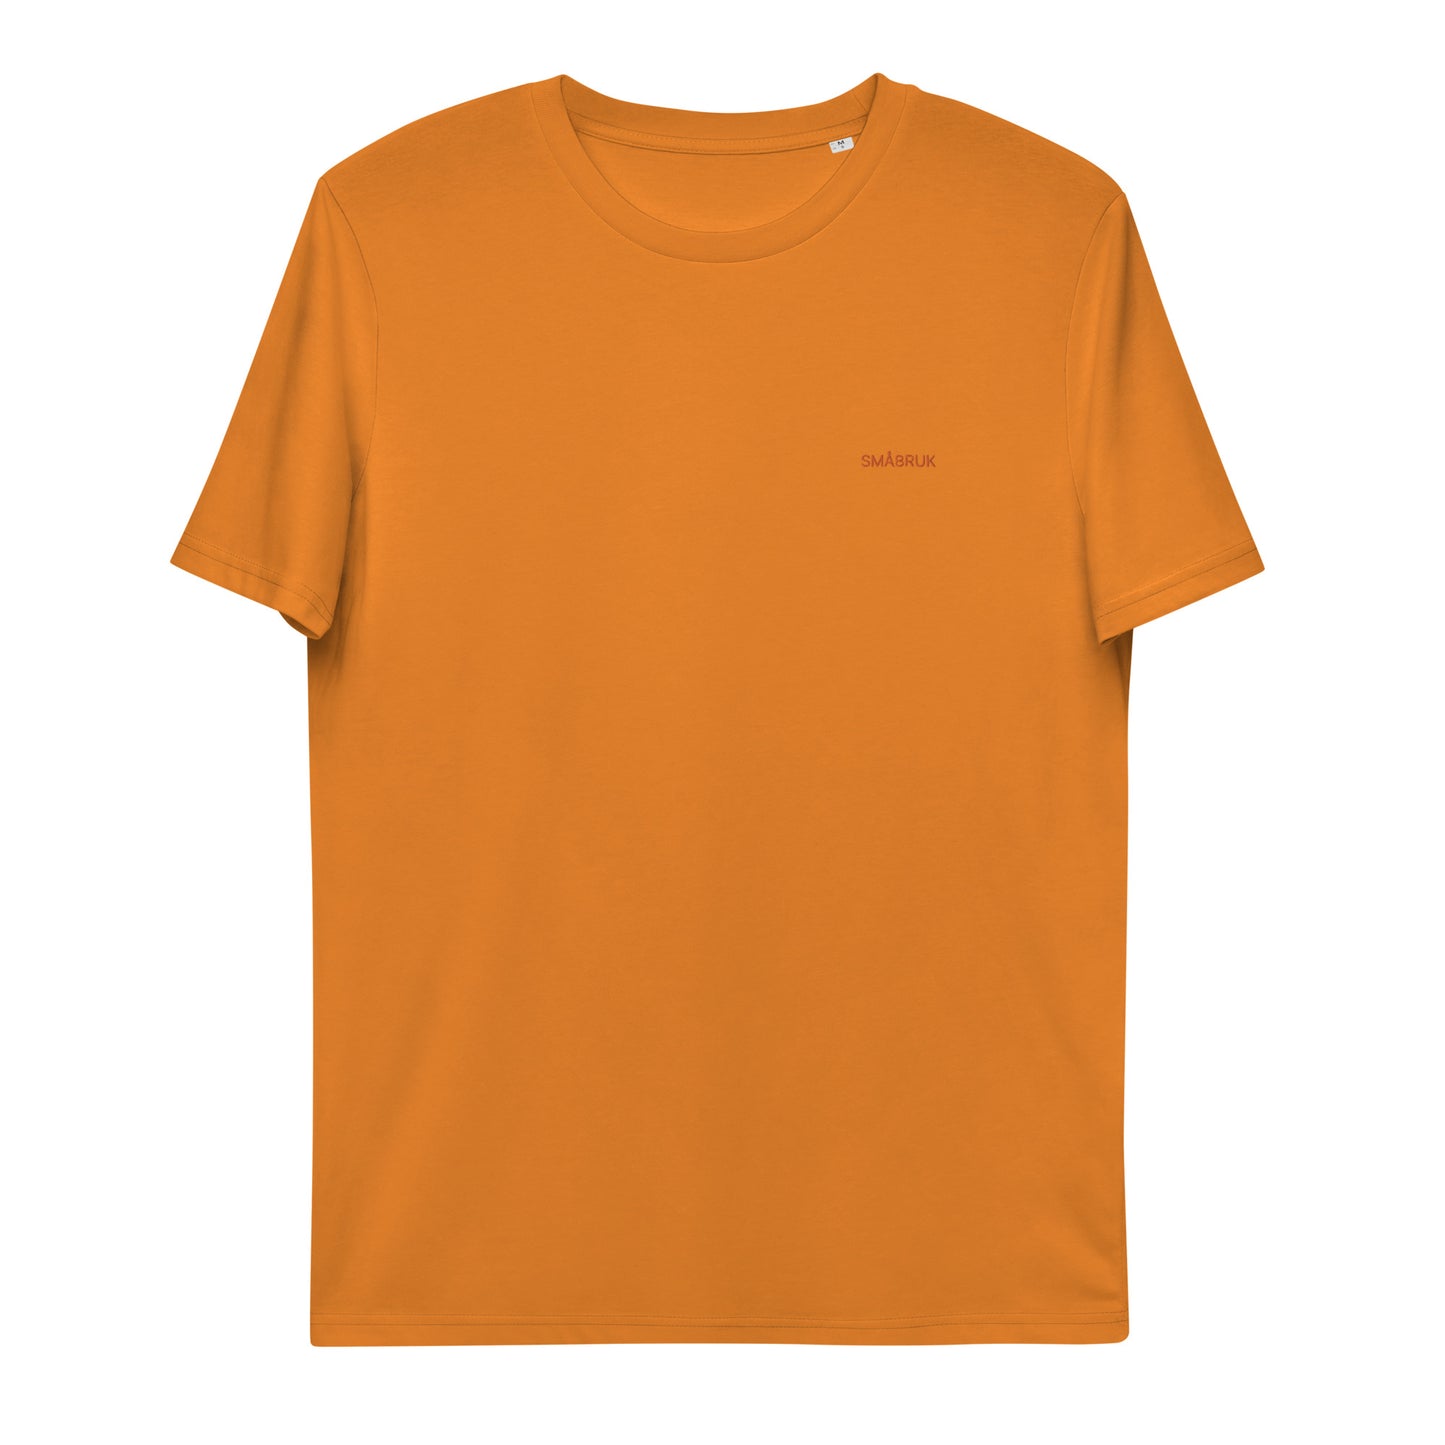 The orange unisex organic cotton t-shirt